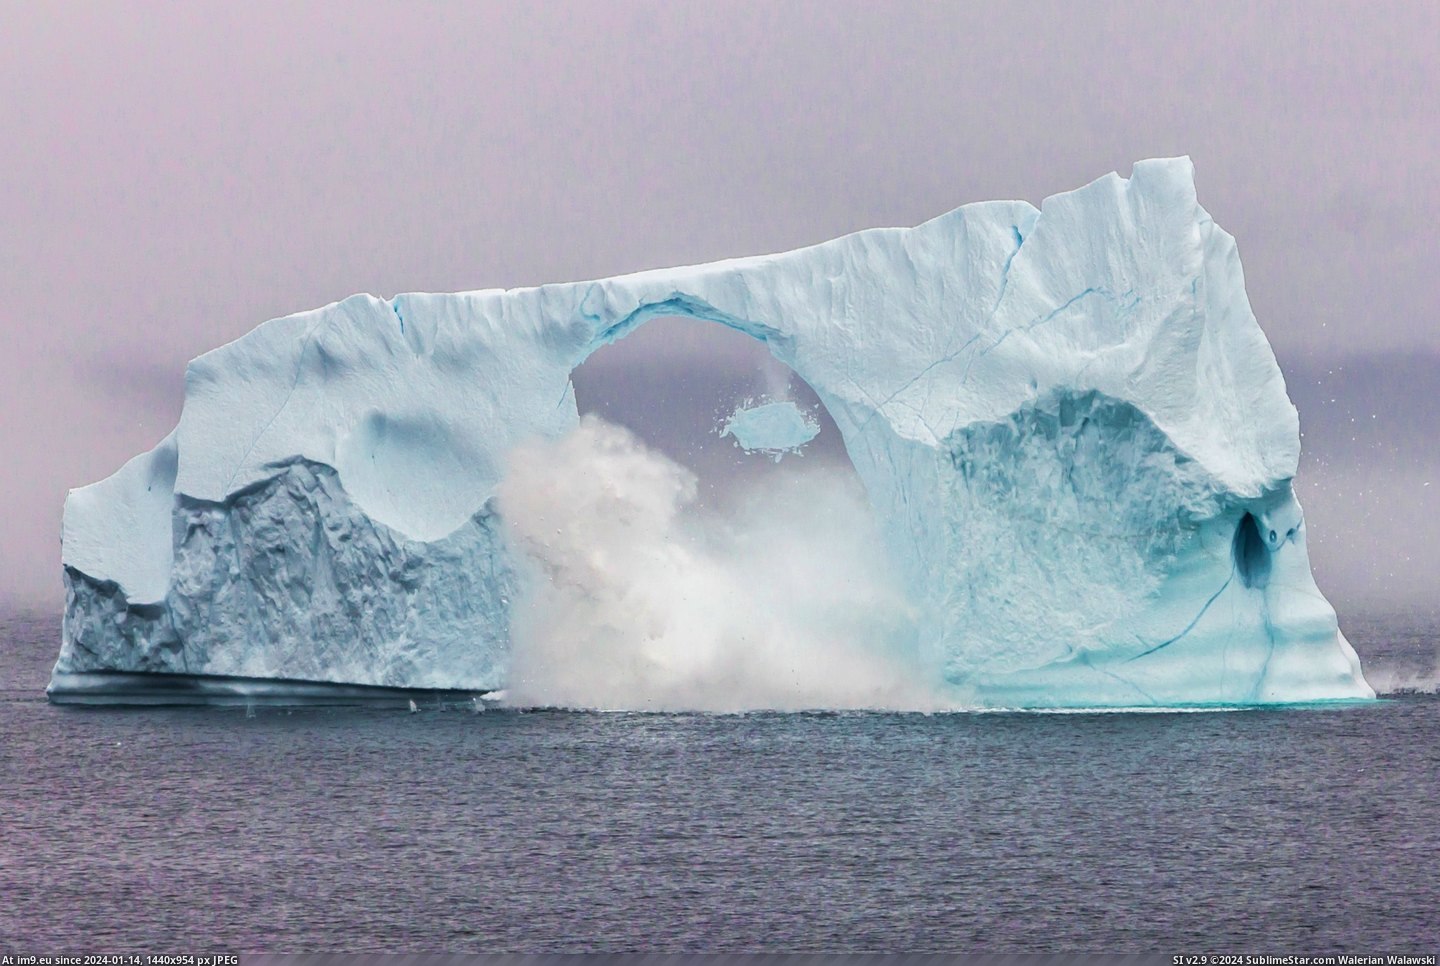 #Morning #Law #Breaking #Iceberg #Spear #Follett #Realtime #Cape #Bro #Newfoundland [Earthporn] Iceberg breaking up in realtime this morning Cape Spear Newfoundland. Taken by my bro-in-law William Follett! [2793x Pic. (Изображение из альбом My r/EARTHPORN favs))